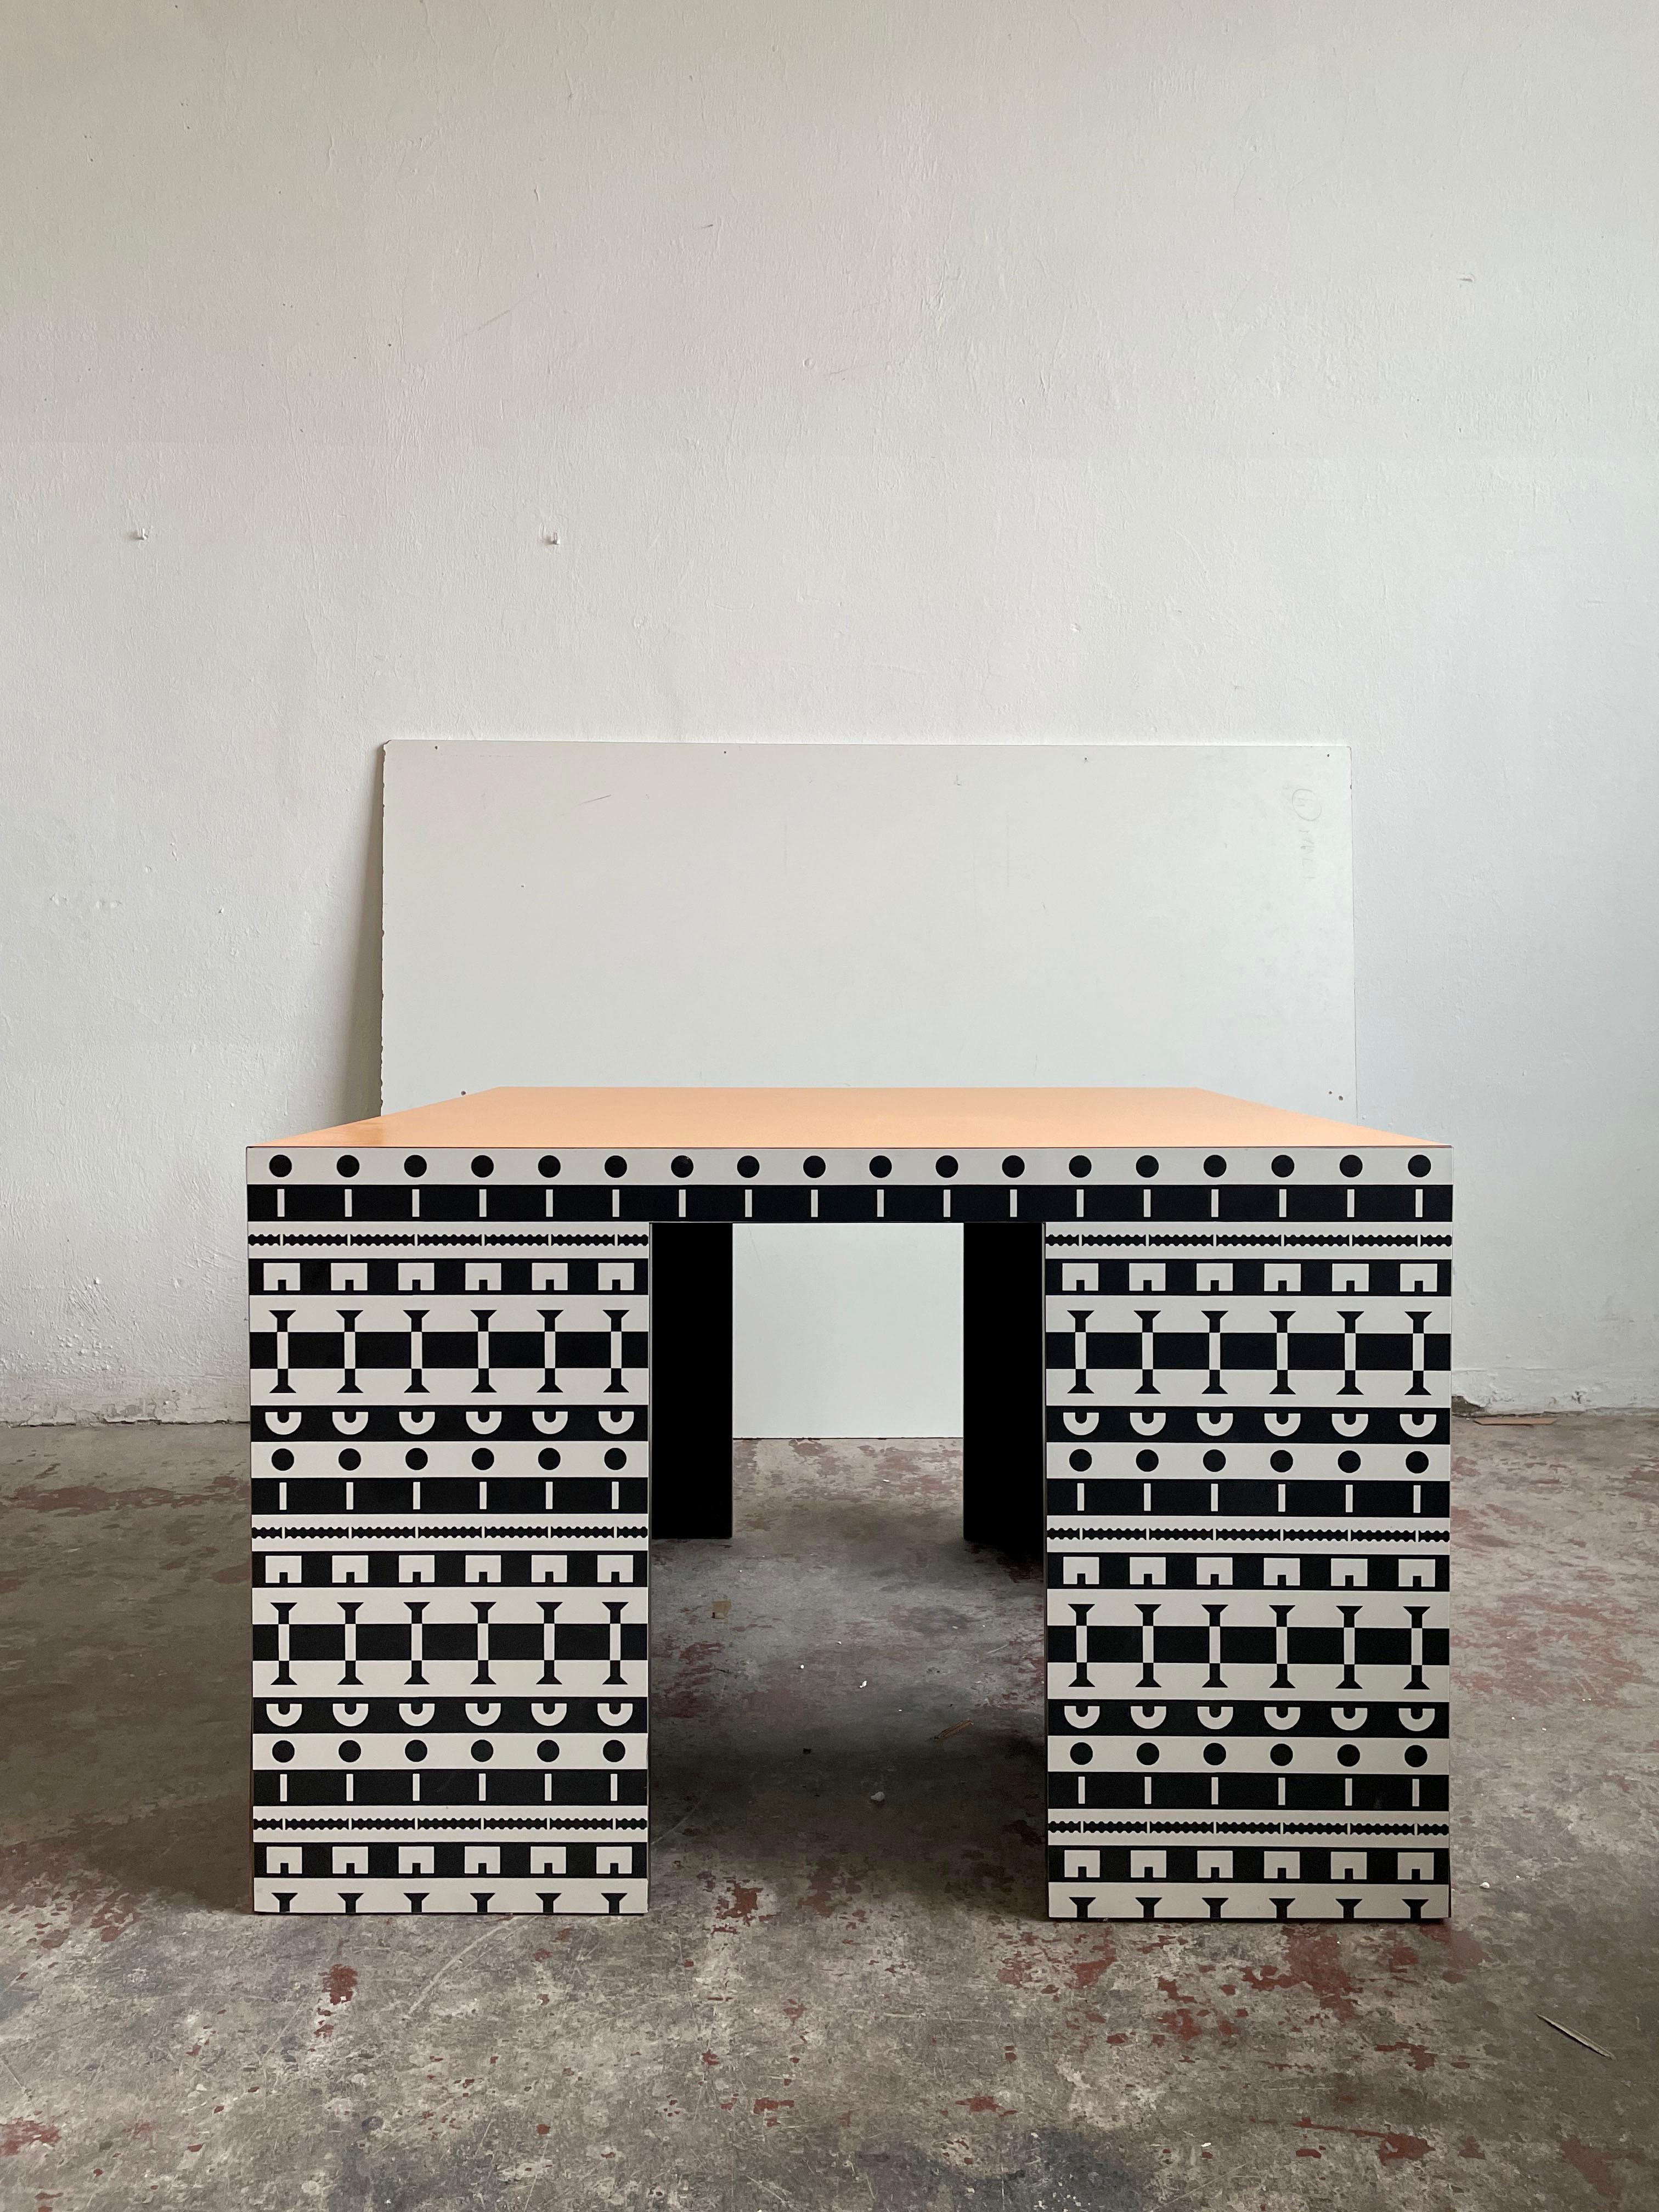 Laminated Alessandro Mendini and A. Guerriero, Table and Chairs 'Ollo', Studio Alchimia